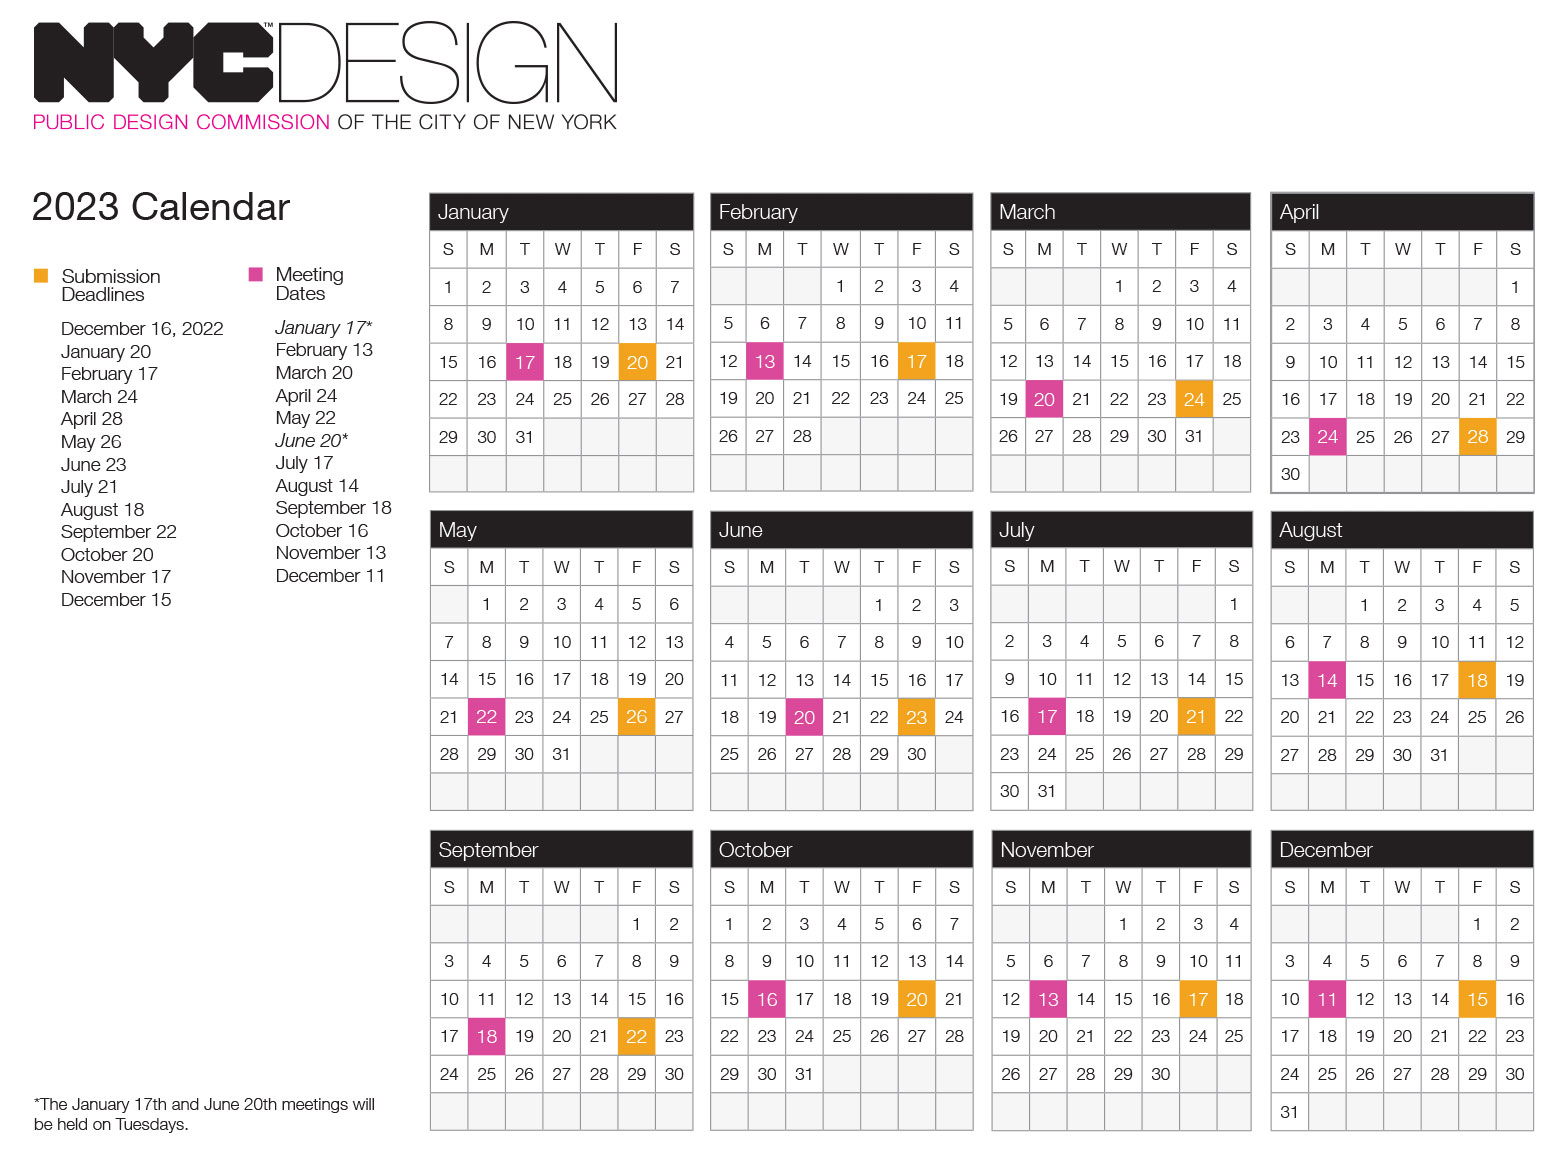 Design Commission 2023 Calendar